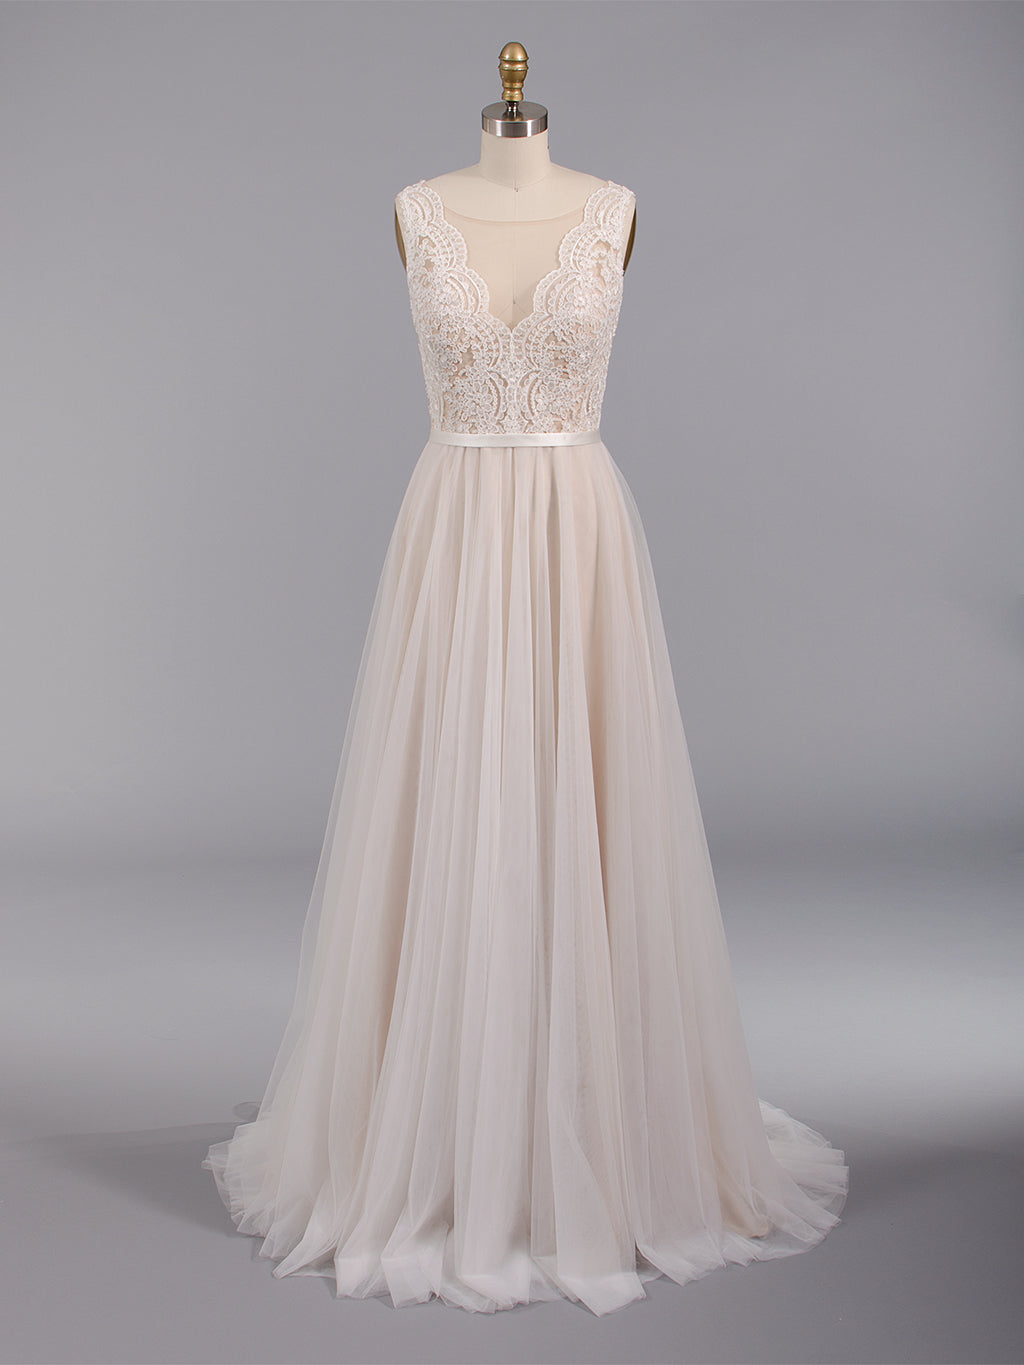 Sleeveless Lace Wedding Dress With Tulle Skirts 4010 Wedding